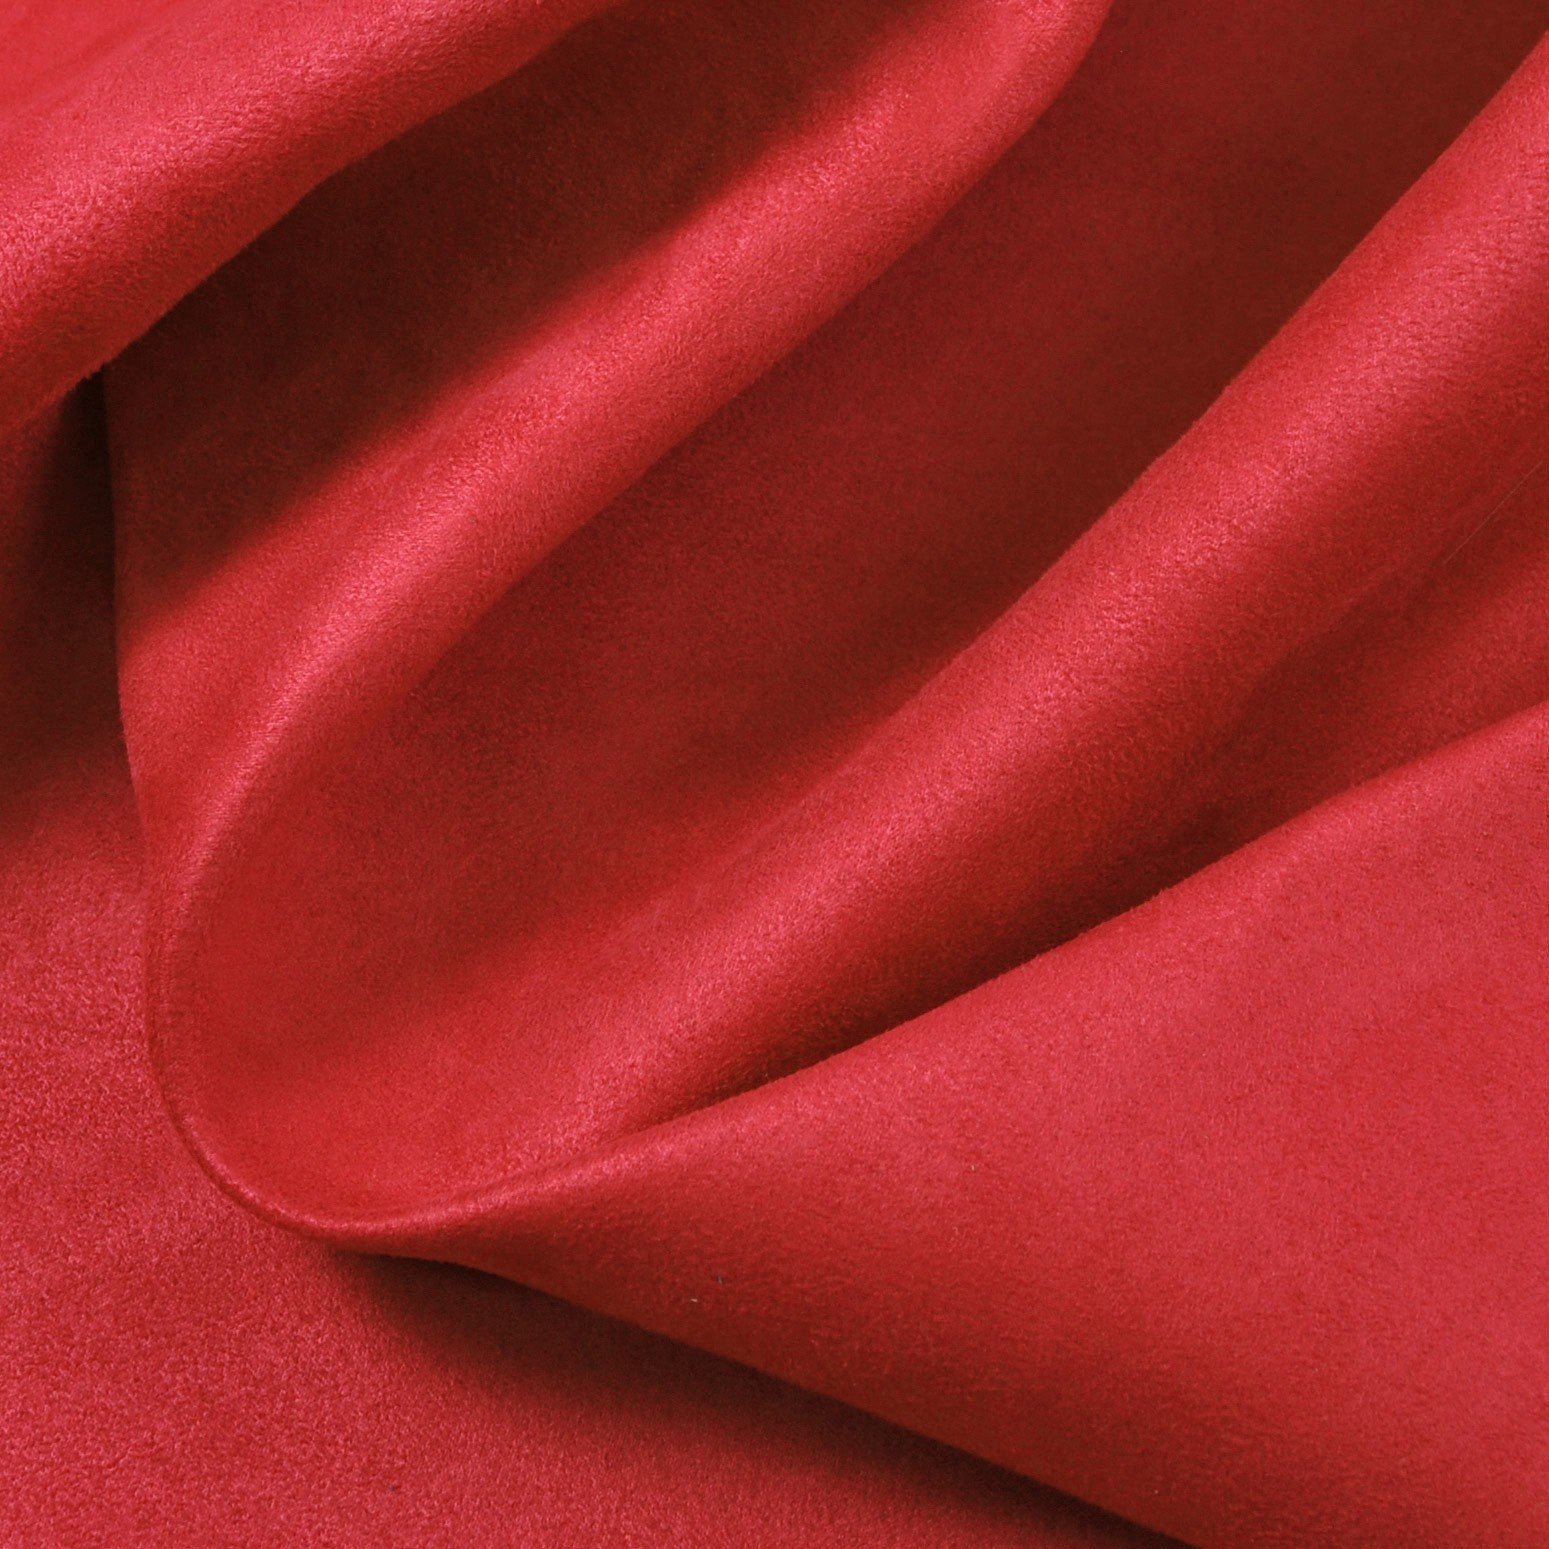 Brick Red Suede Backed Neoprene Fabric, Fabrics